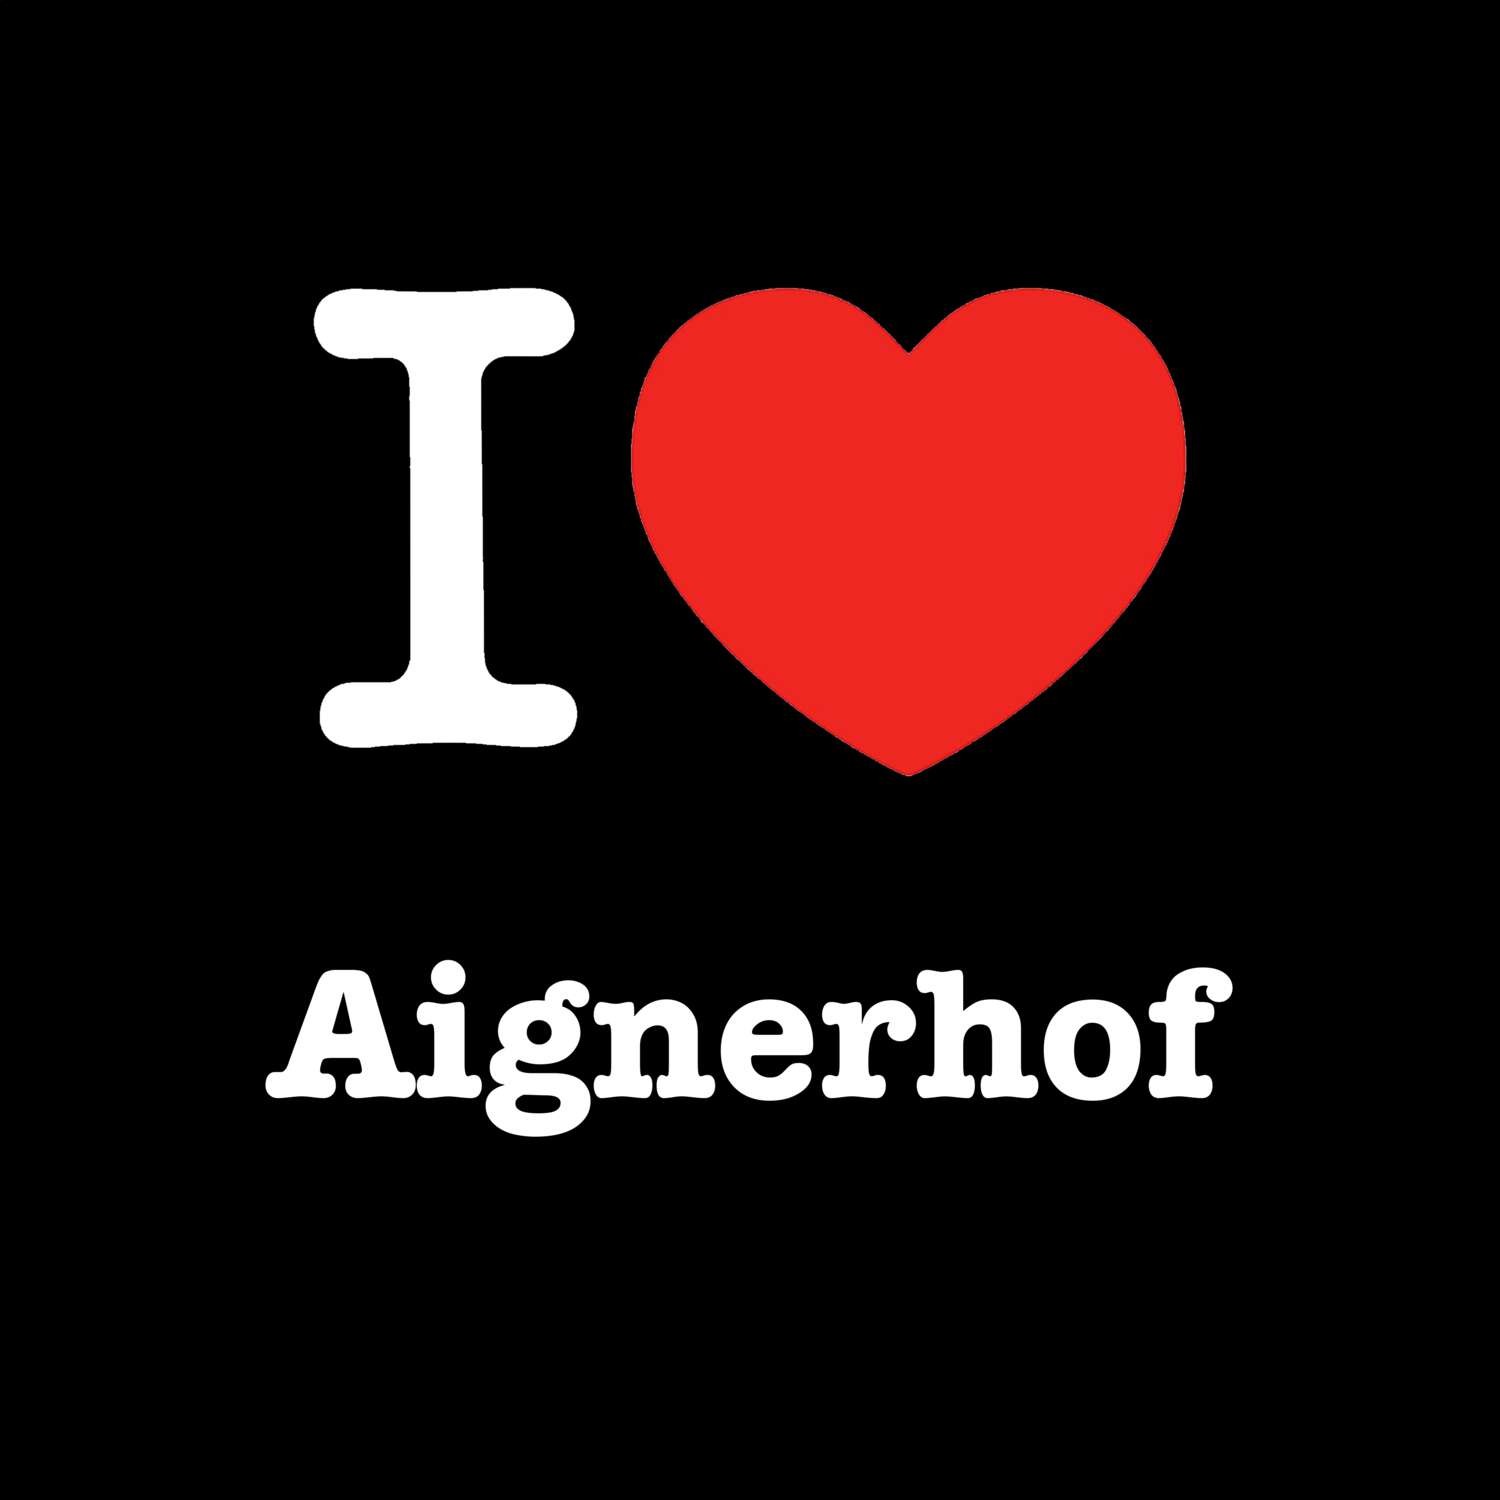 Aignerhof T-Shirt »I love«